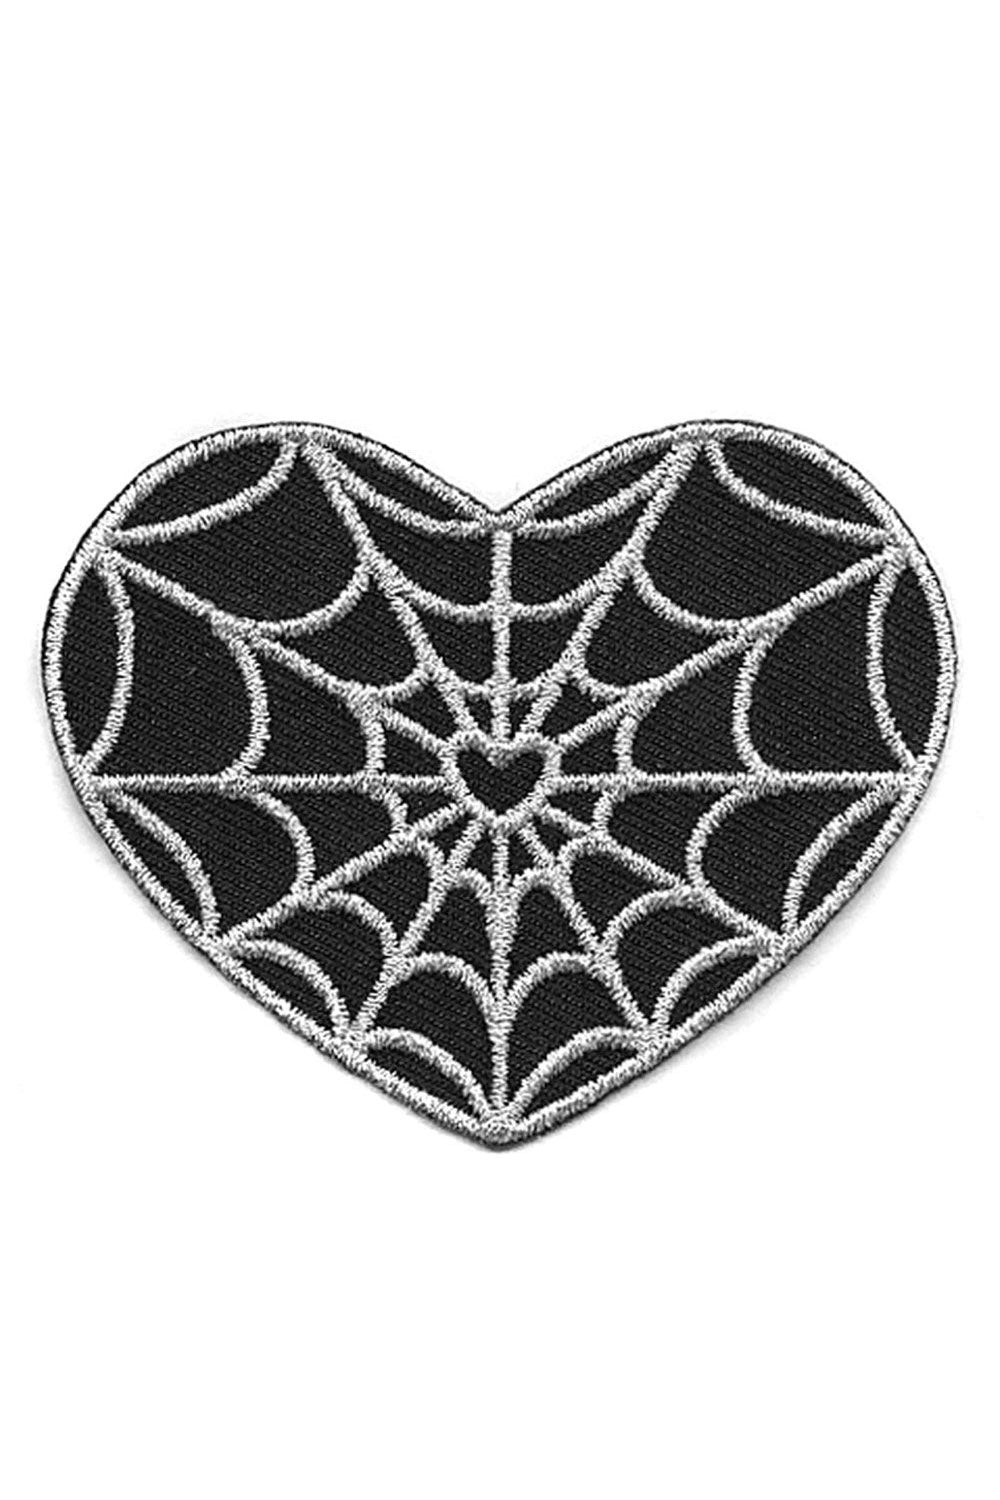 Spiderweb Heart Silver Patch